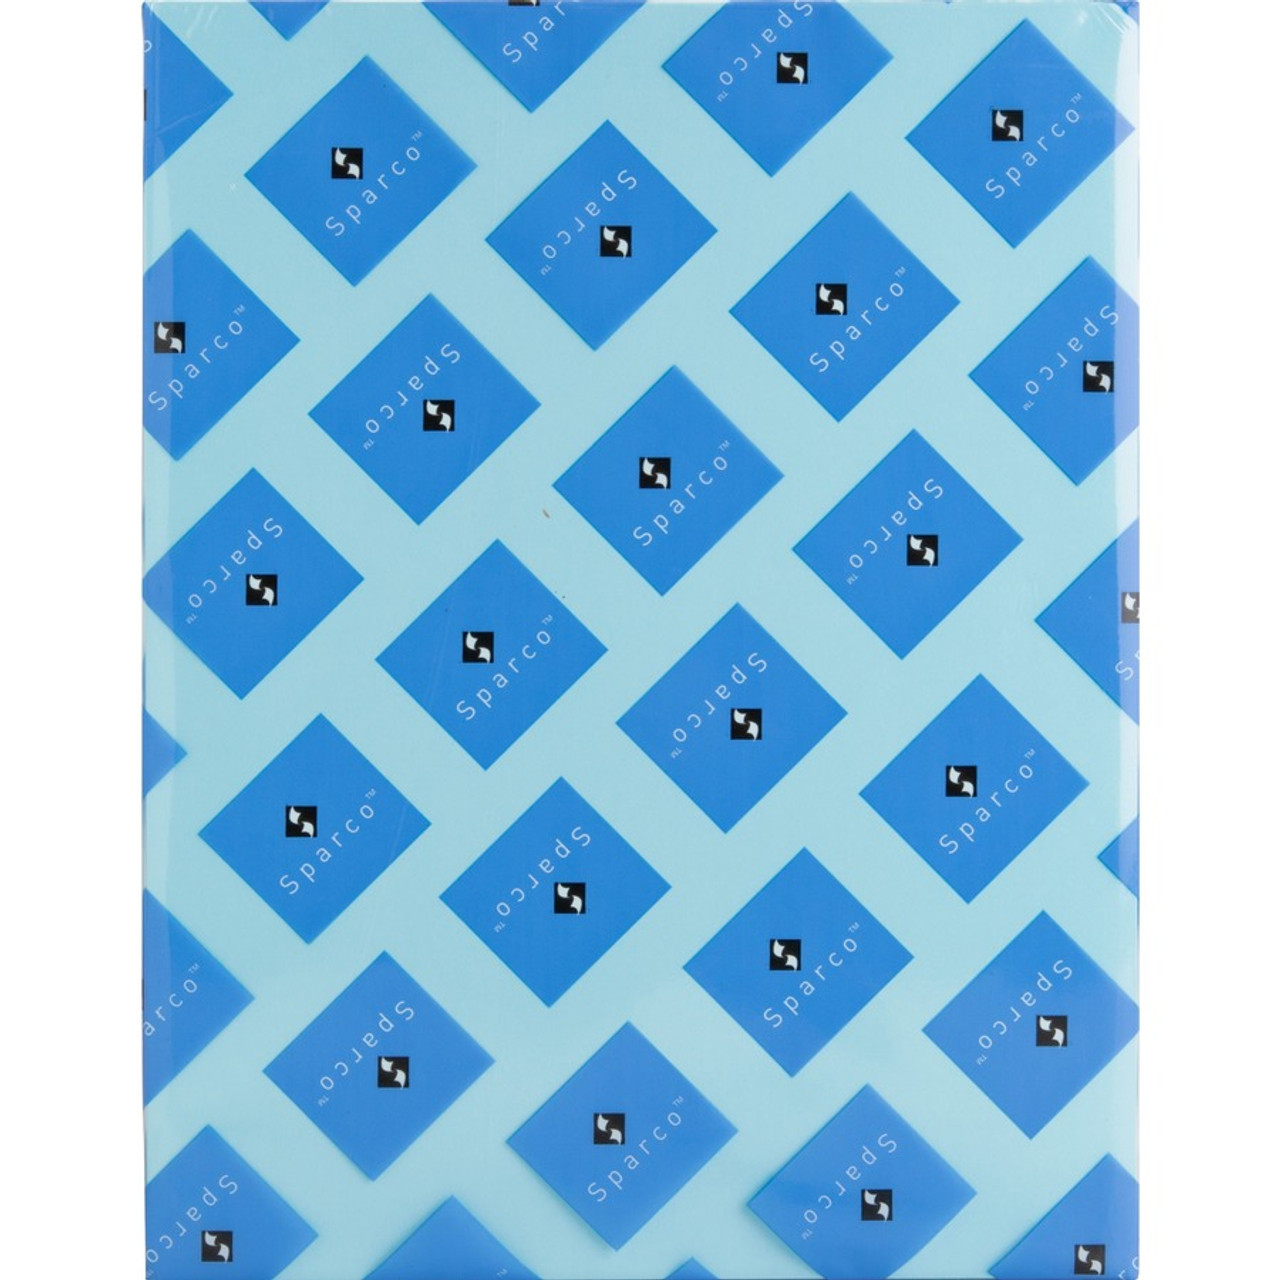 Sparco 05121 Blue Copy Paper, 8-1/2 x 11, 20 Lb., Ream of 500 Sheets